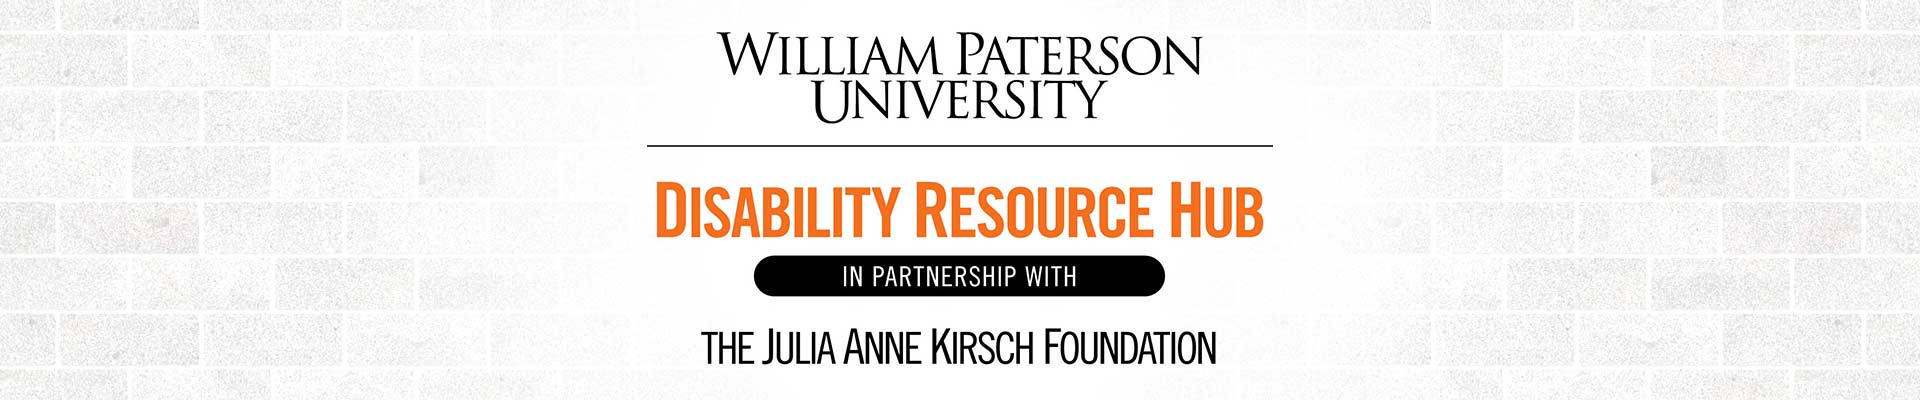 disability-resource-hub-banner